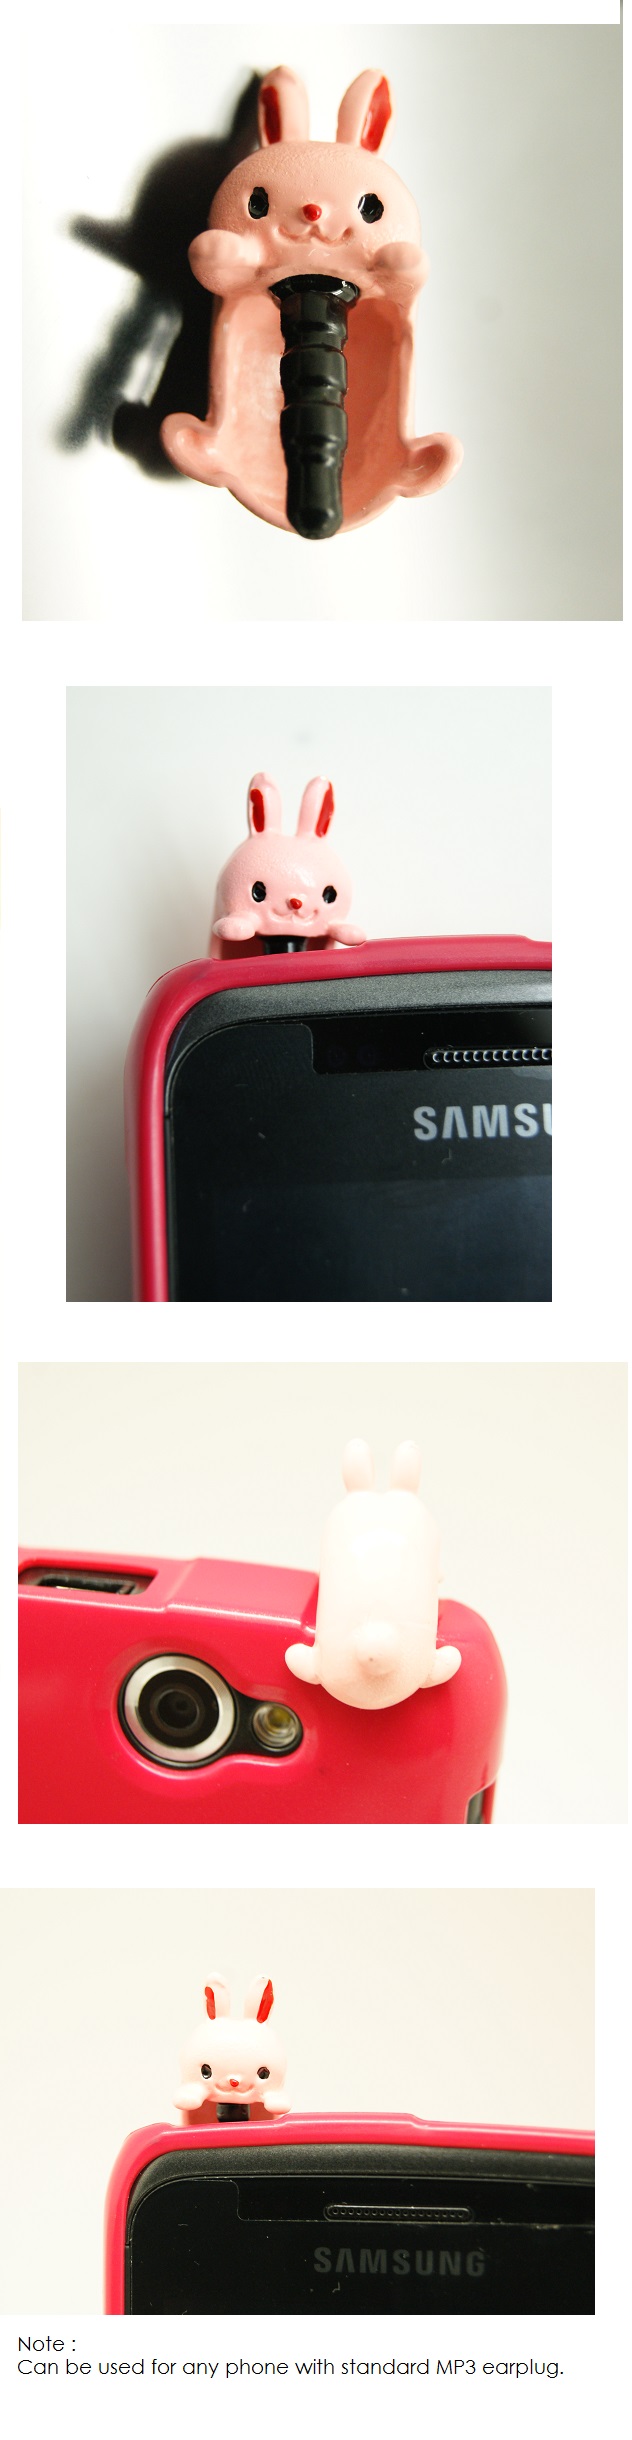 Ss0432 Rabbit bunny phone plug korean accessories shop